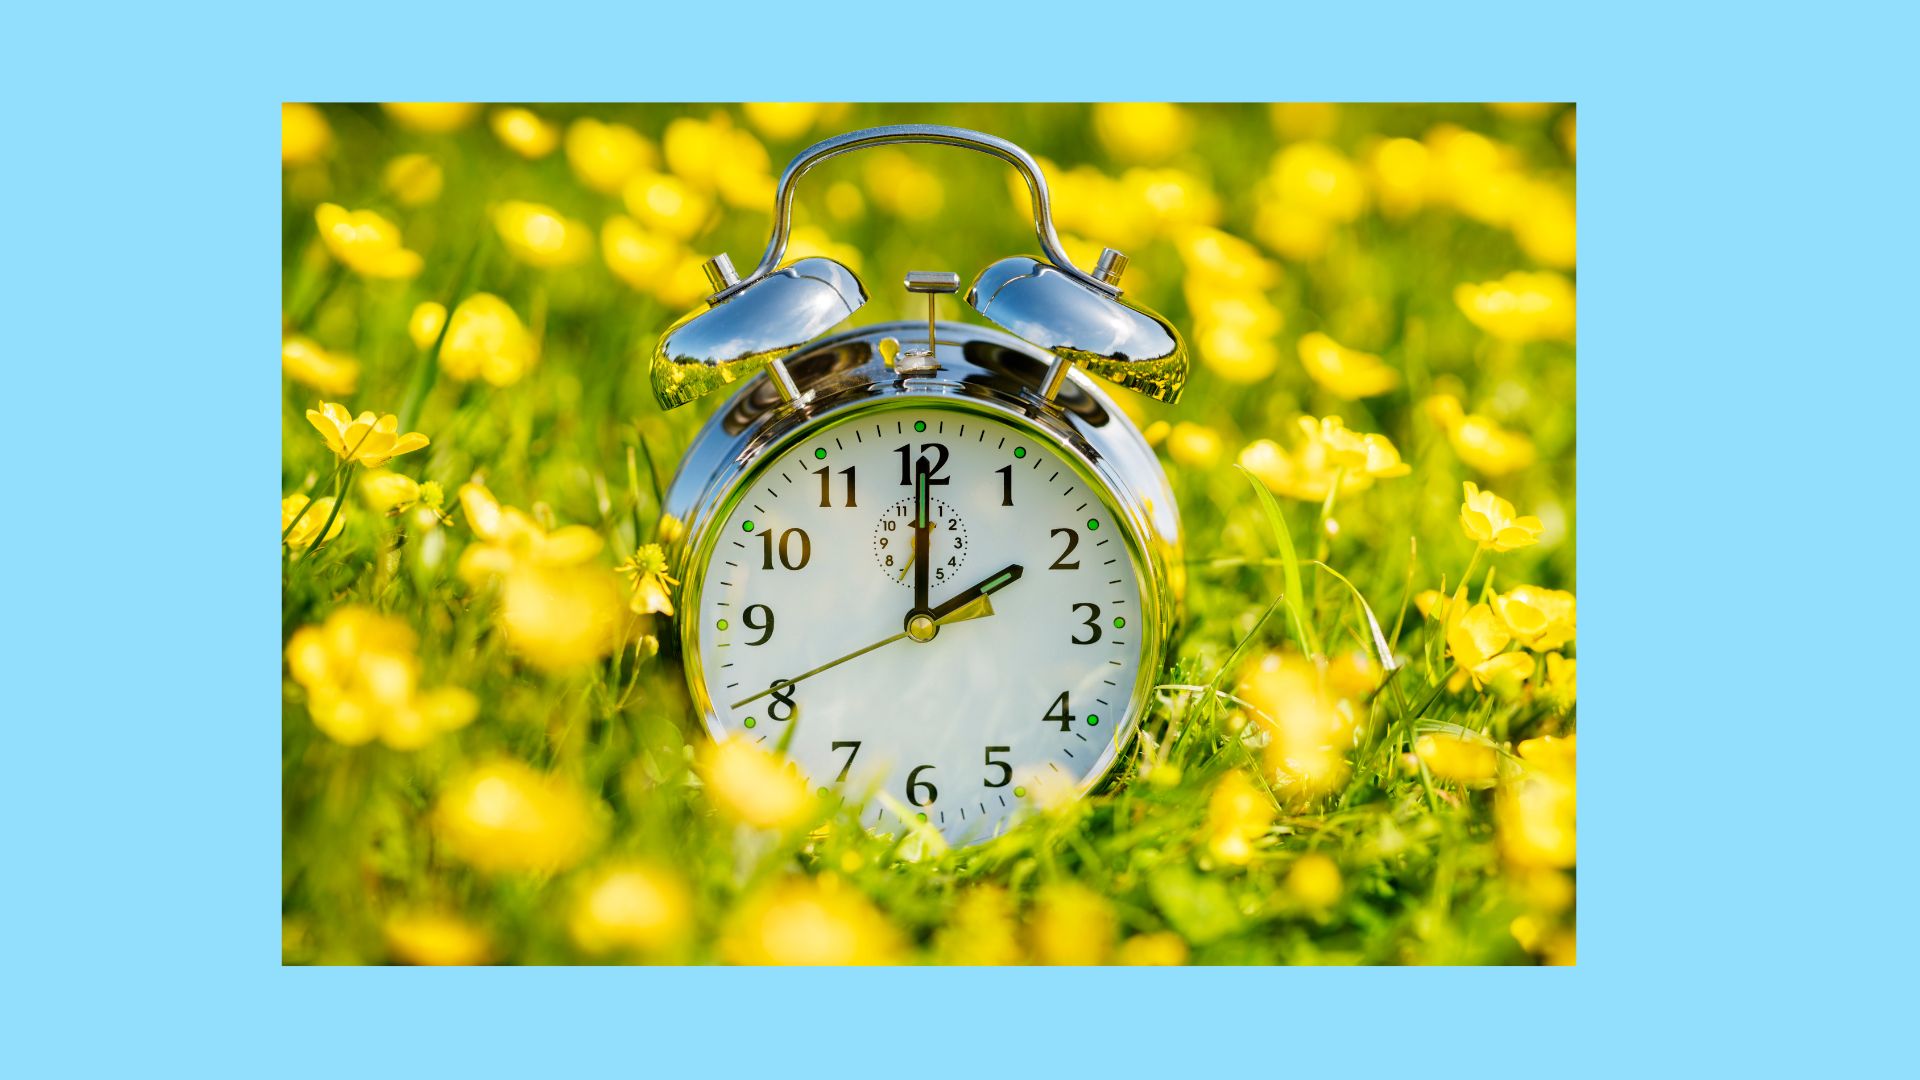 Retro alarm clock in field of yellow flowers